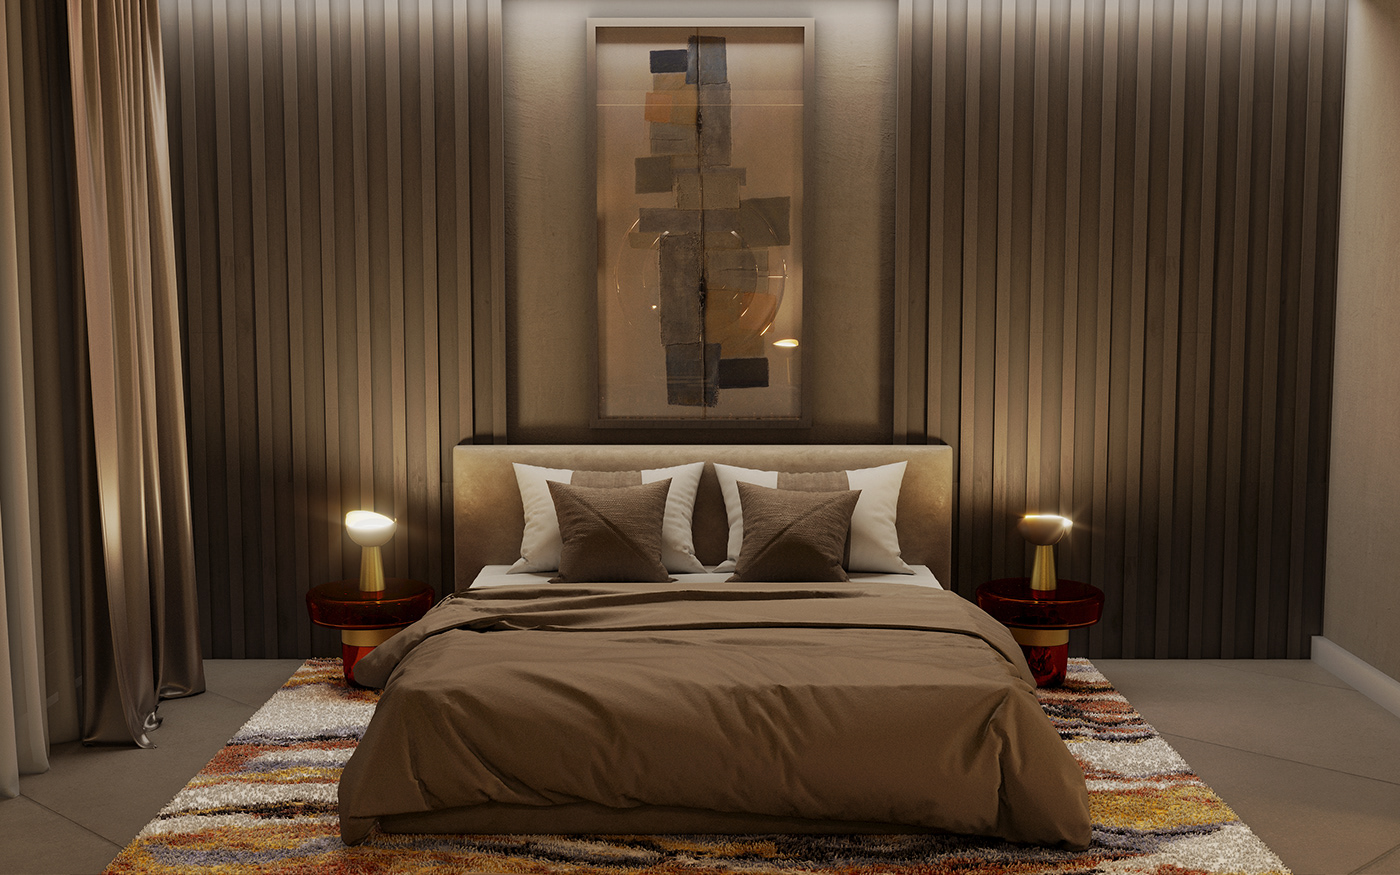 furniture Draga & Aurel Delightfull Essential Home architecture 3ds max Render visualization modern